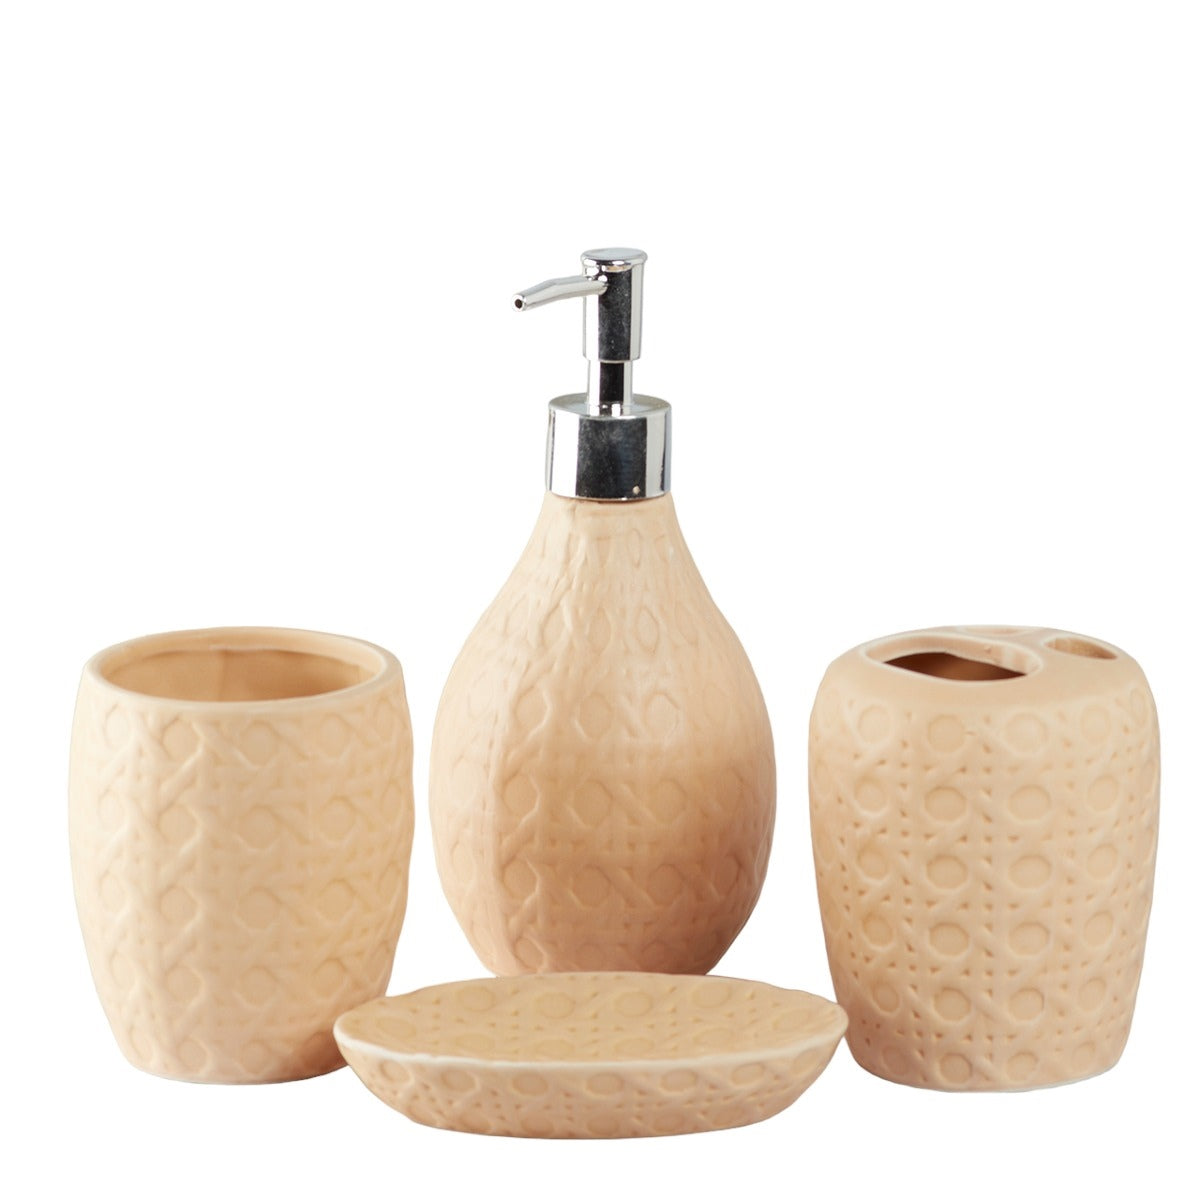 Ceramic Bathroom Accessories Set of 4 Bath Set with Soap Dispenser (9875)